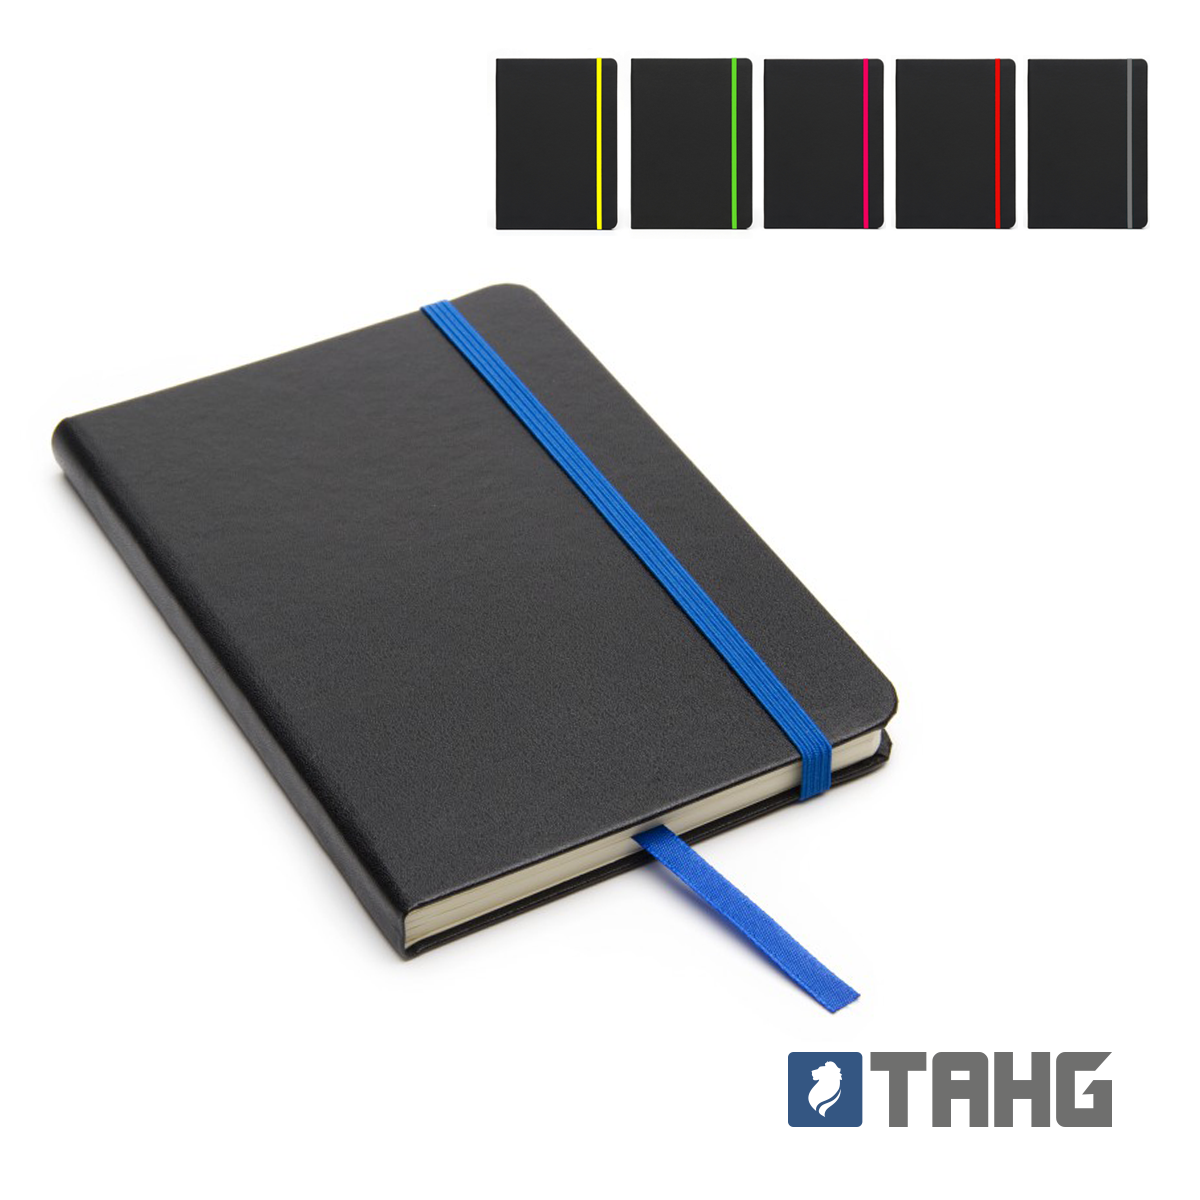 Cuaderno Writer A6 80 hojas Tapa Negra con detalle - TAHG | LOGO GRATIS !